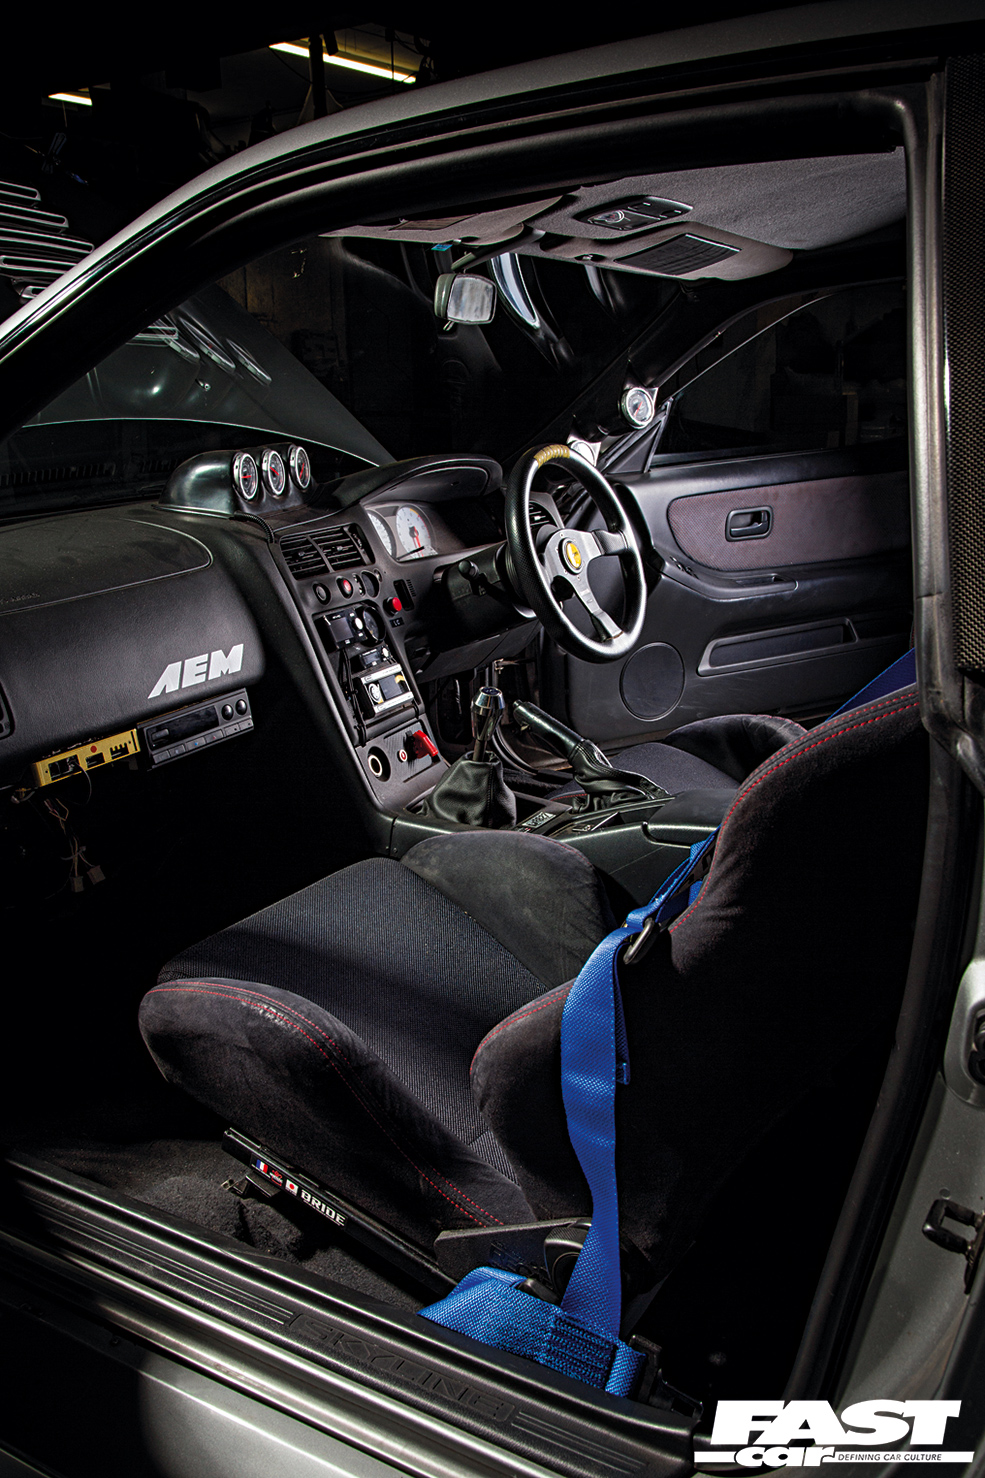 Alex Khateeb Nissan Skyline R33 GT-R interior tuning